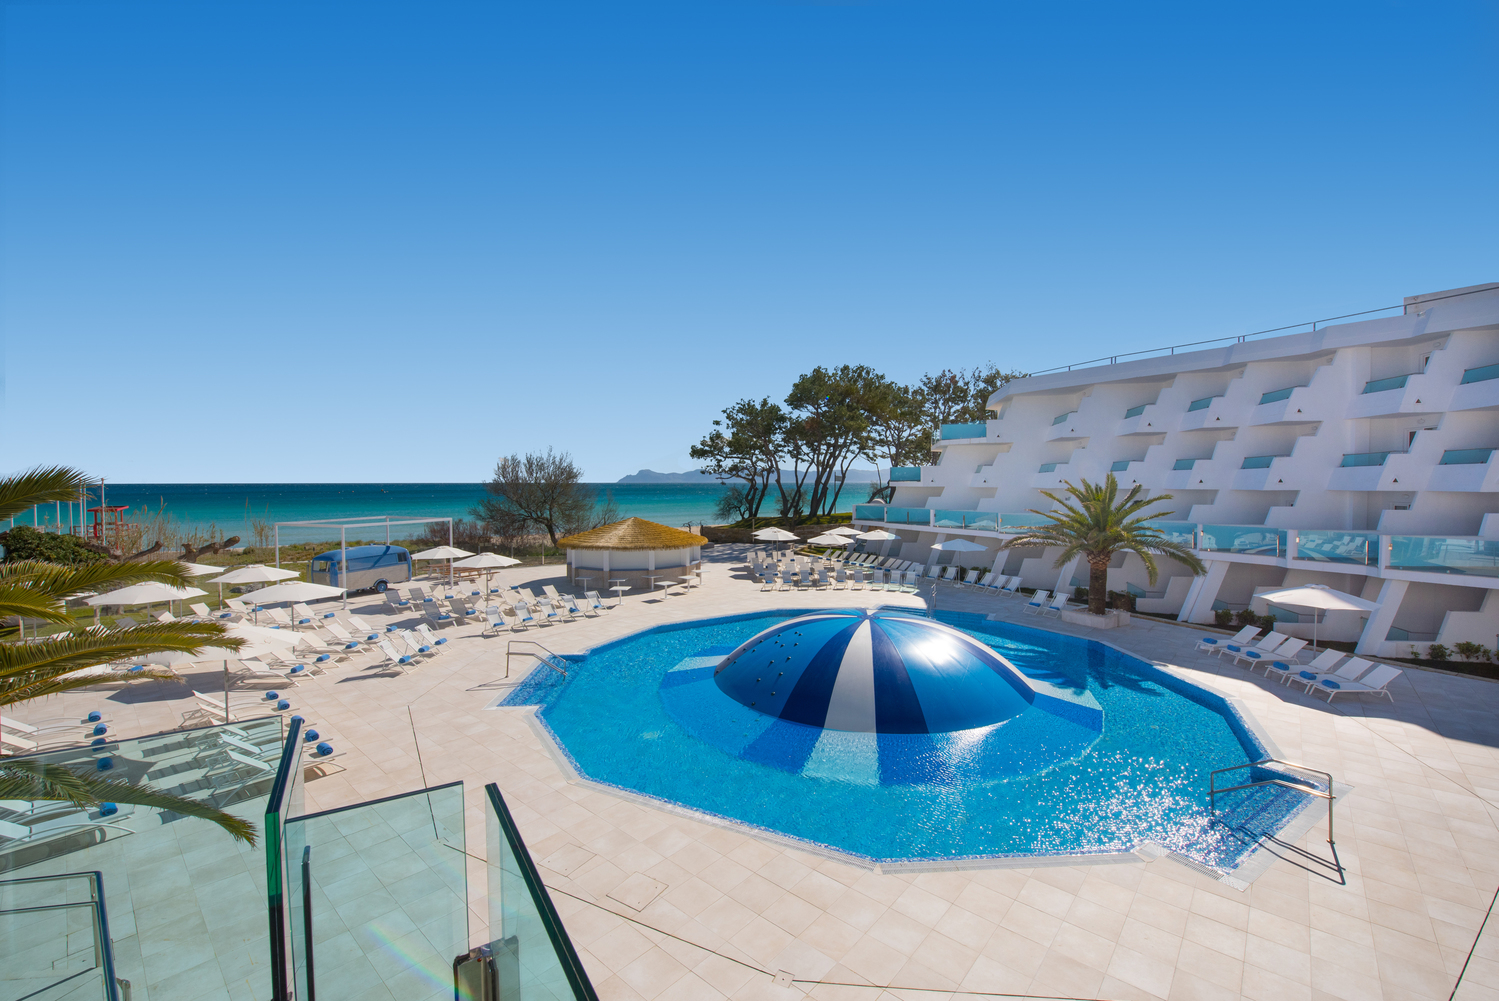 Discover Iberostar Playa de Muro, a perfect hotel for families